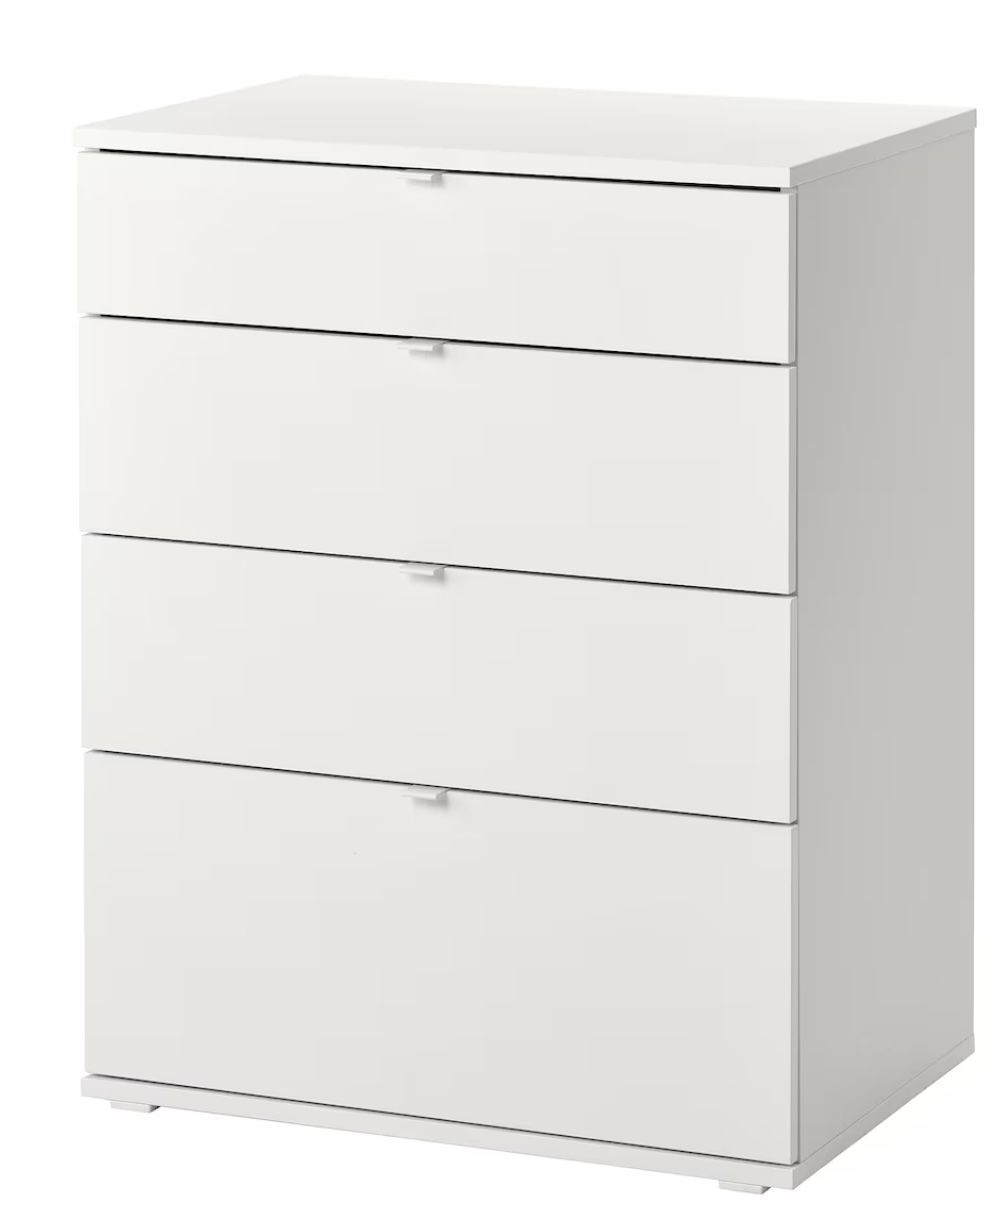 4-drawer chest